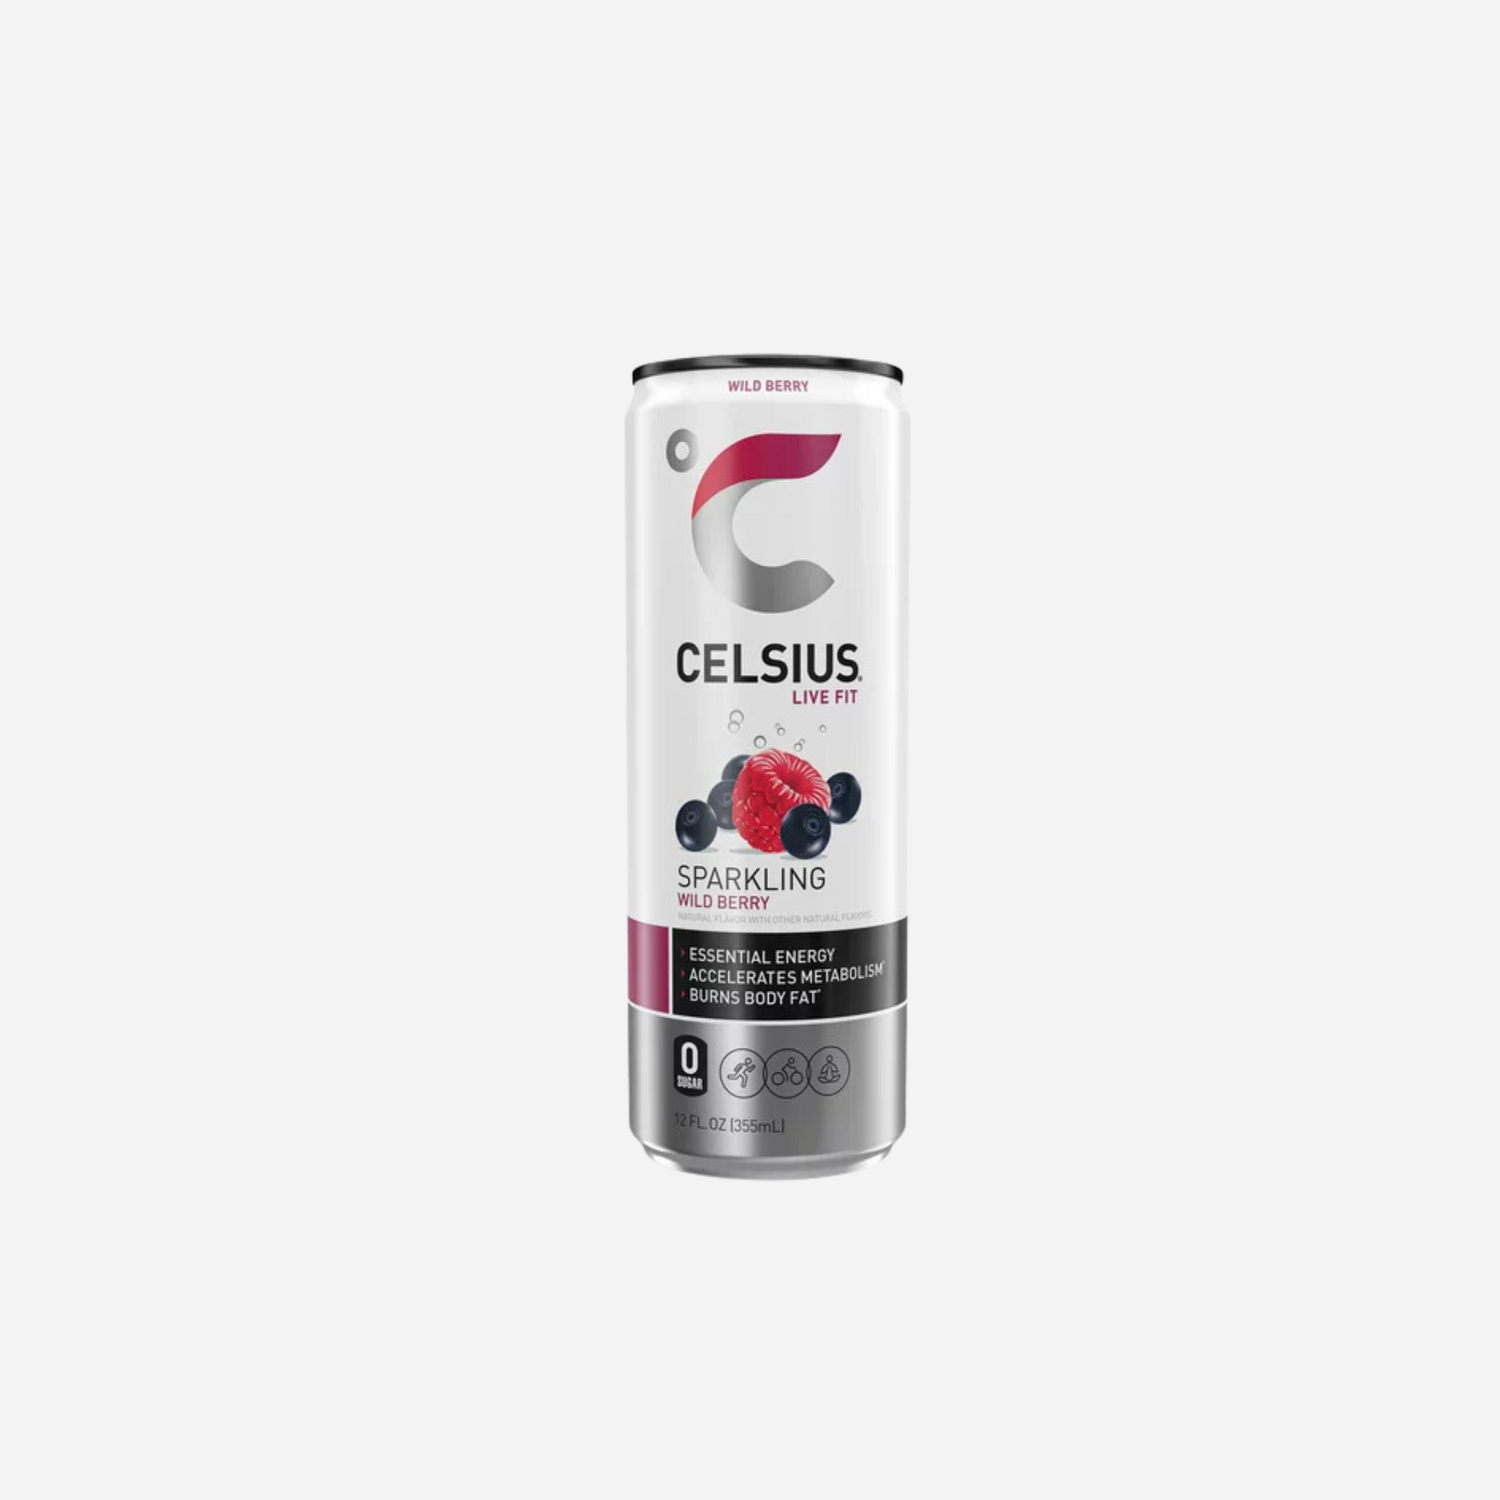 Celsius Sparkling Energy Drink Wild Berry, 12.0 FL OZ